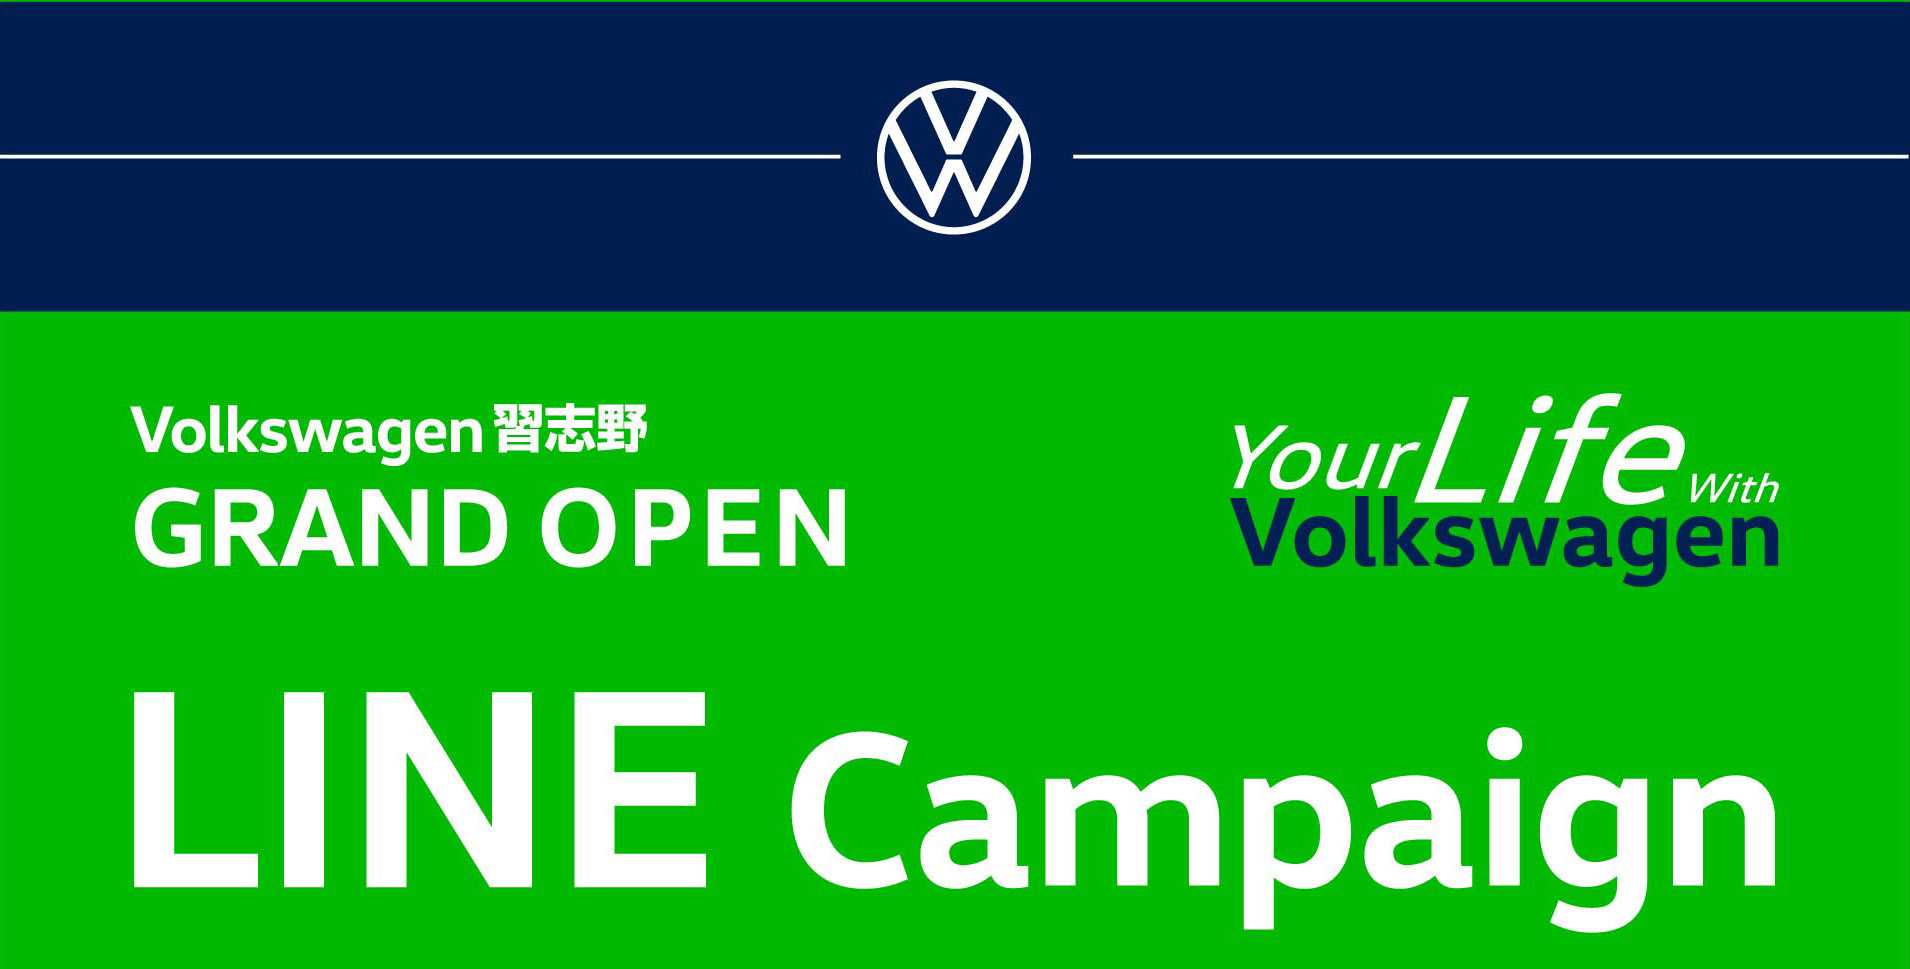 Volkswagen習志野 LINE Campaign